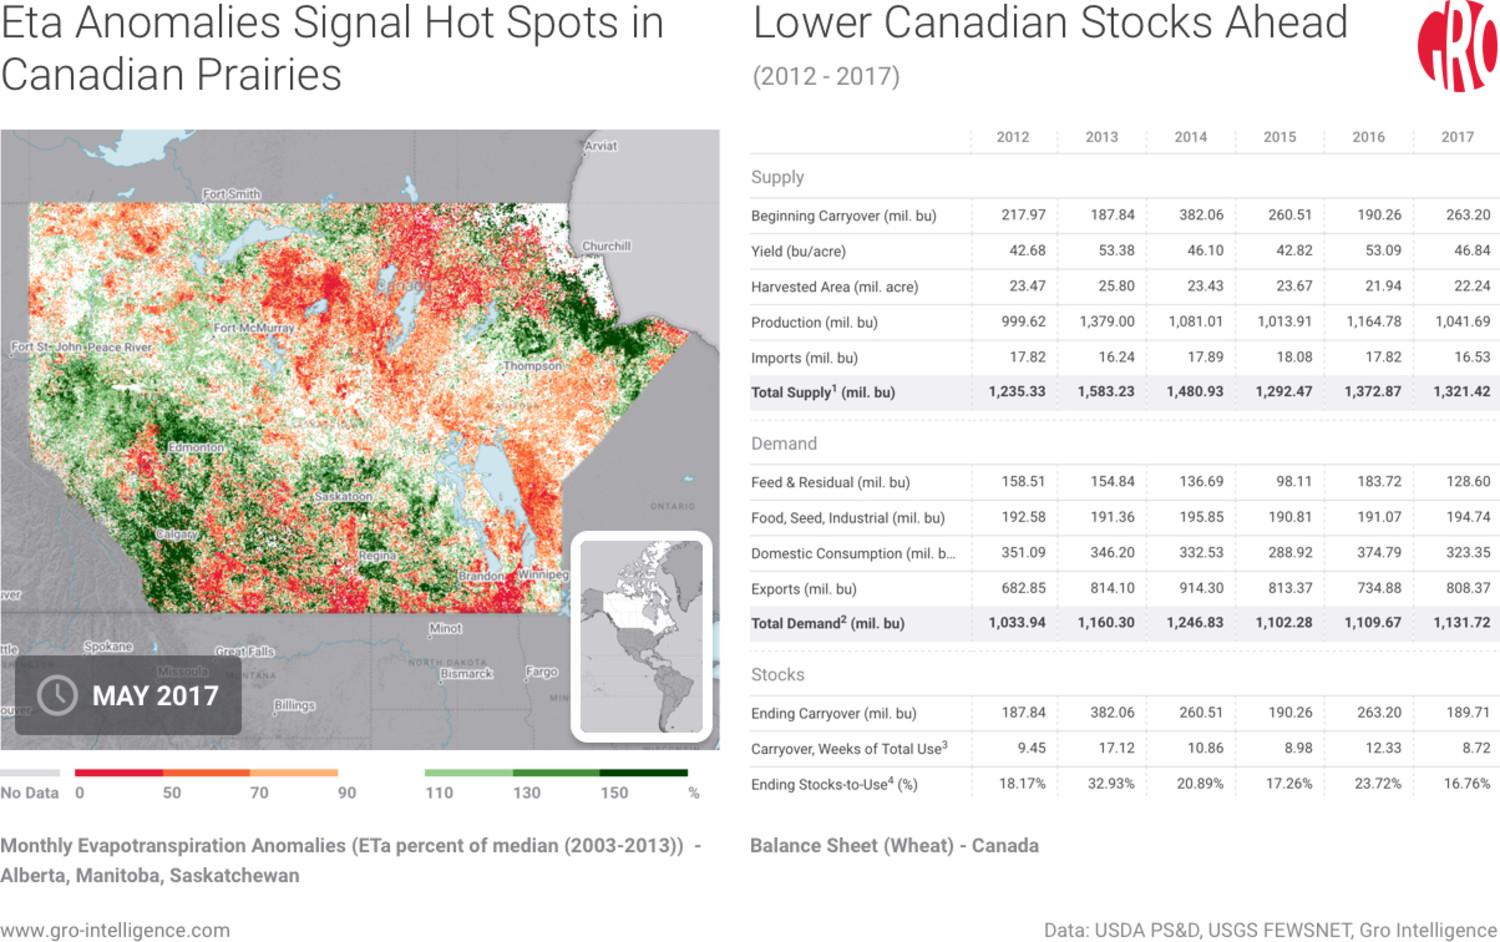 Evapotranspiration anomalies across Canadian Praries and Wheat Balance Sheet